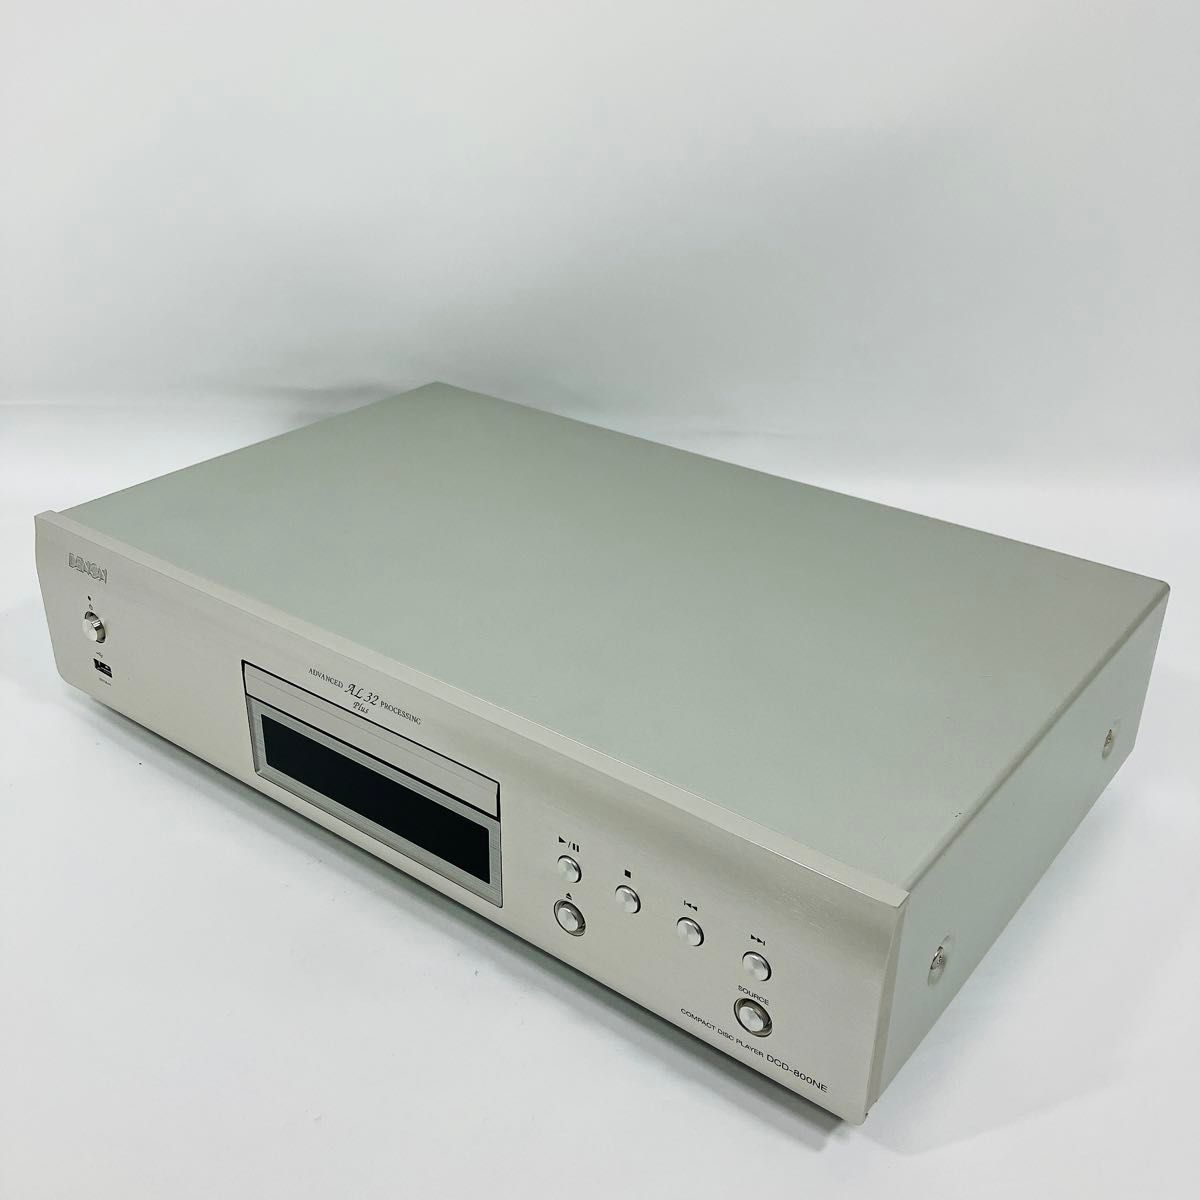 Denon デノン DCD-800NE ハイ・パフォーマンスCDプレーヤー プレミアムシルバー DCD-800NESP USB